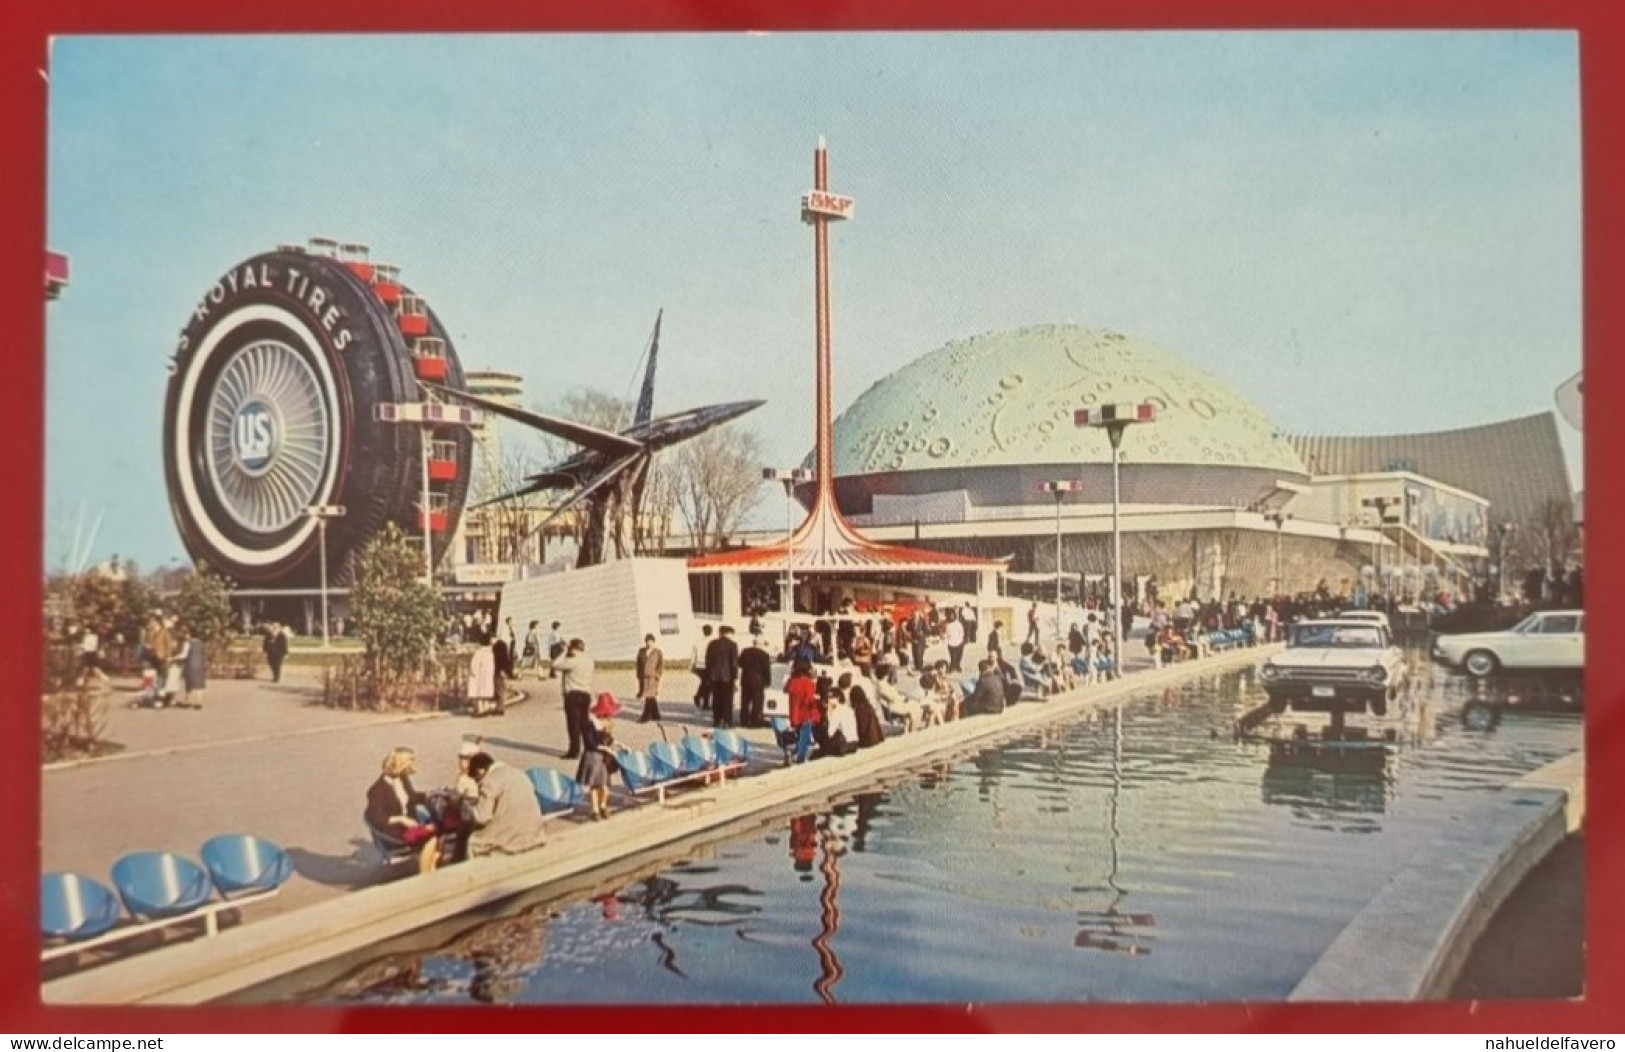 Uncirculated Postcard - USA - NY, NEW YORK WORLD'S FAIR 1964-65 - TRANSPORTATION AREA - Mostre, Esposizioni